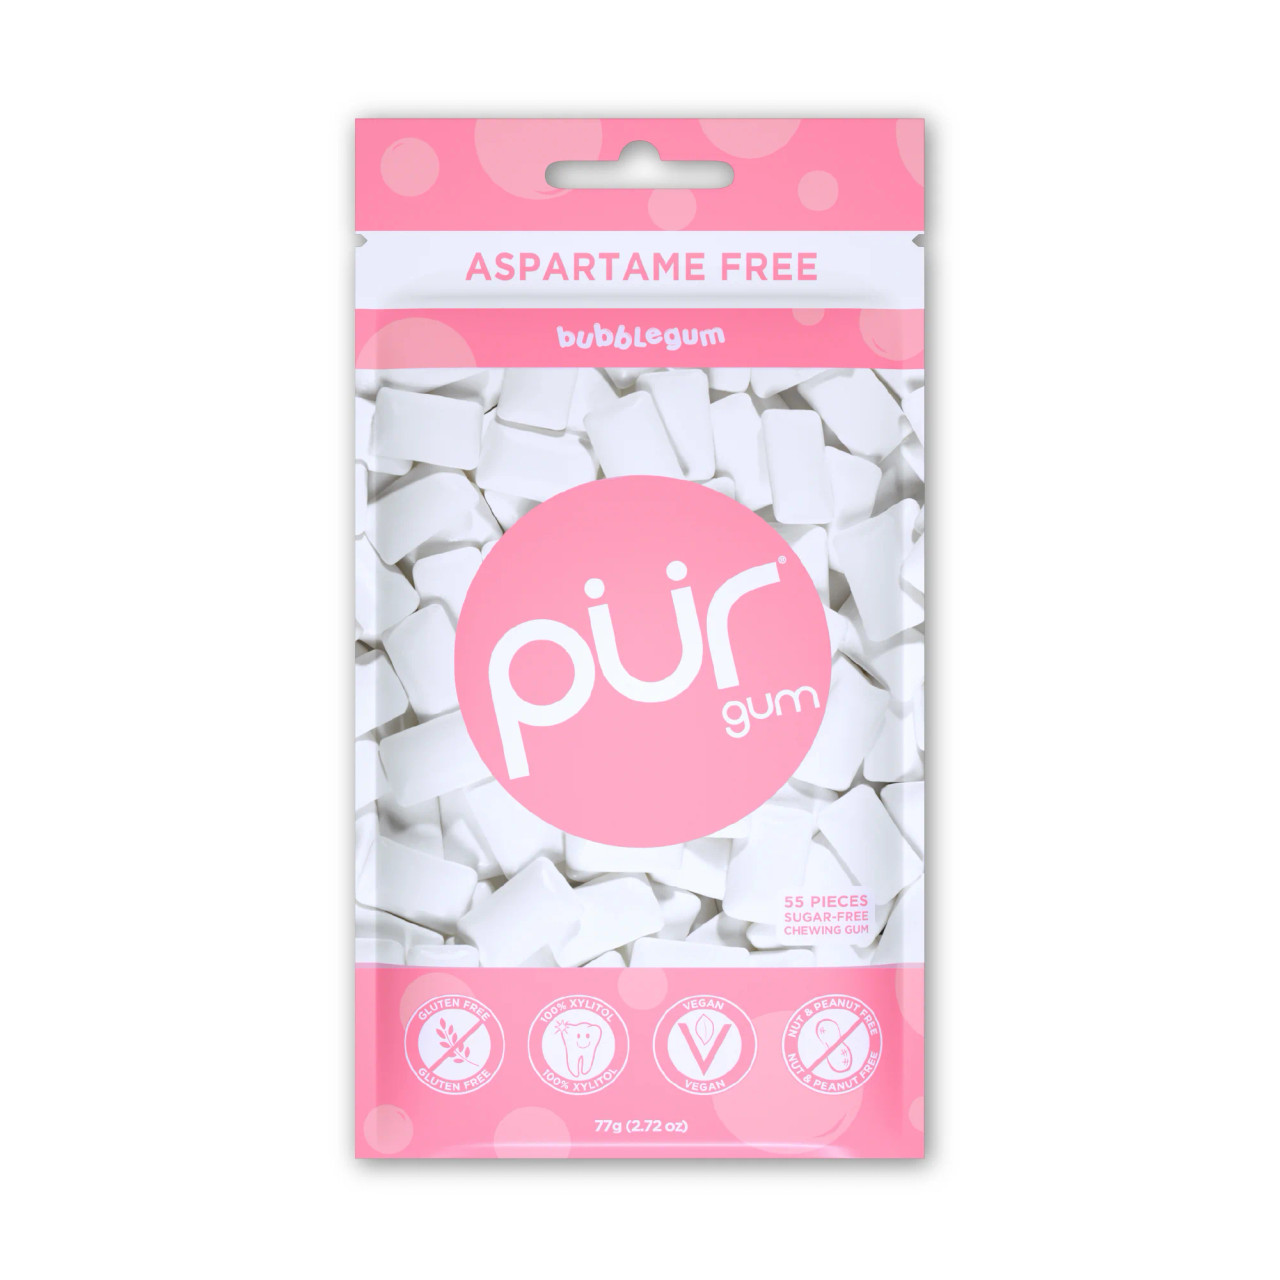 PUR Gum, Aspartame Free Chewing Gum, 100% Xylitol, Sugar Free, Vega